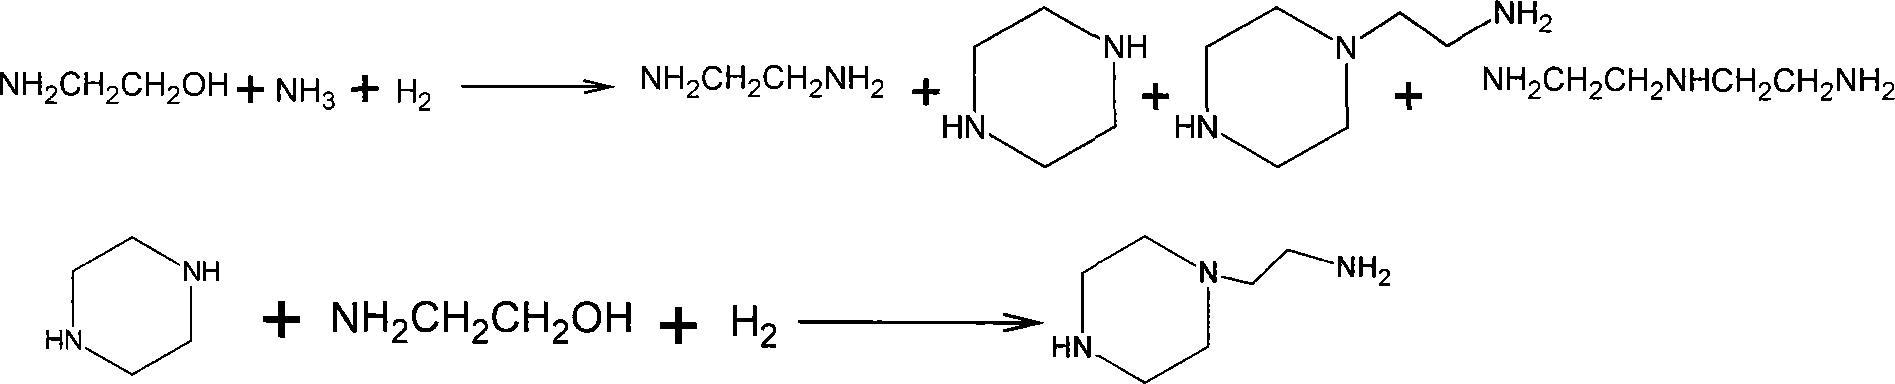 Combined preparation method for ethylene diamine and aminoethylpiperazine